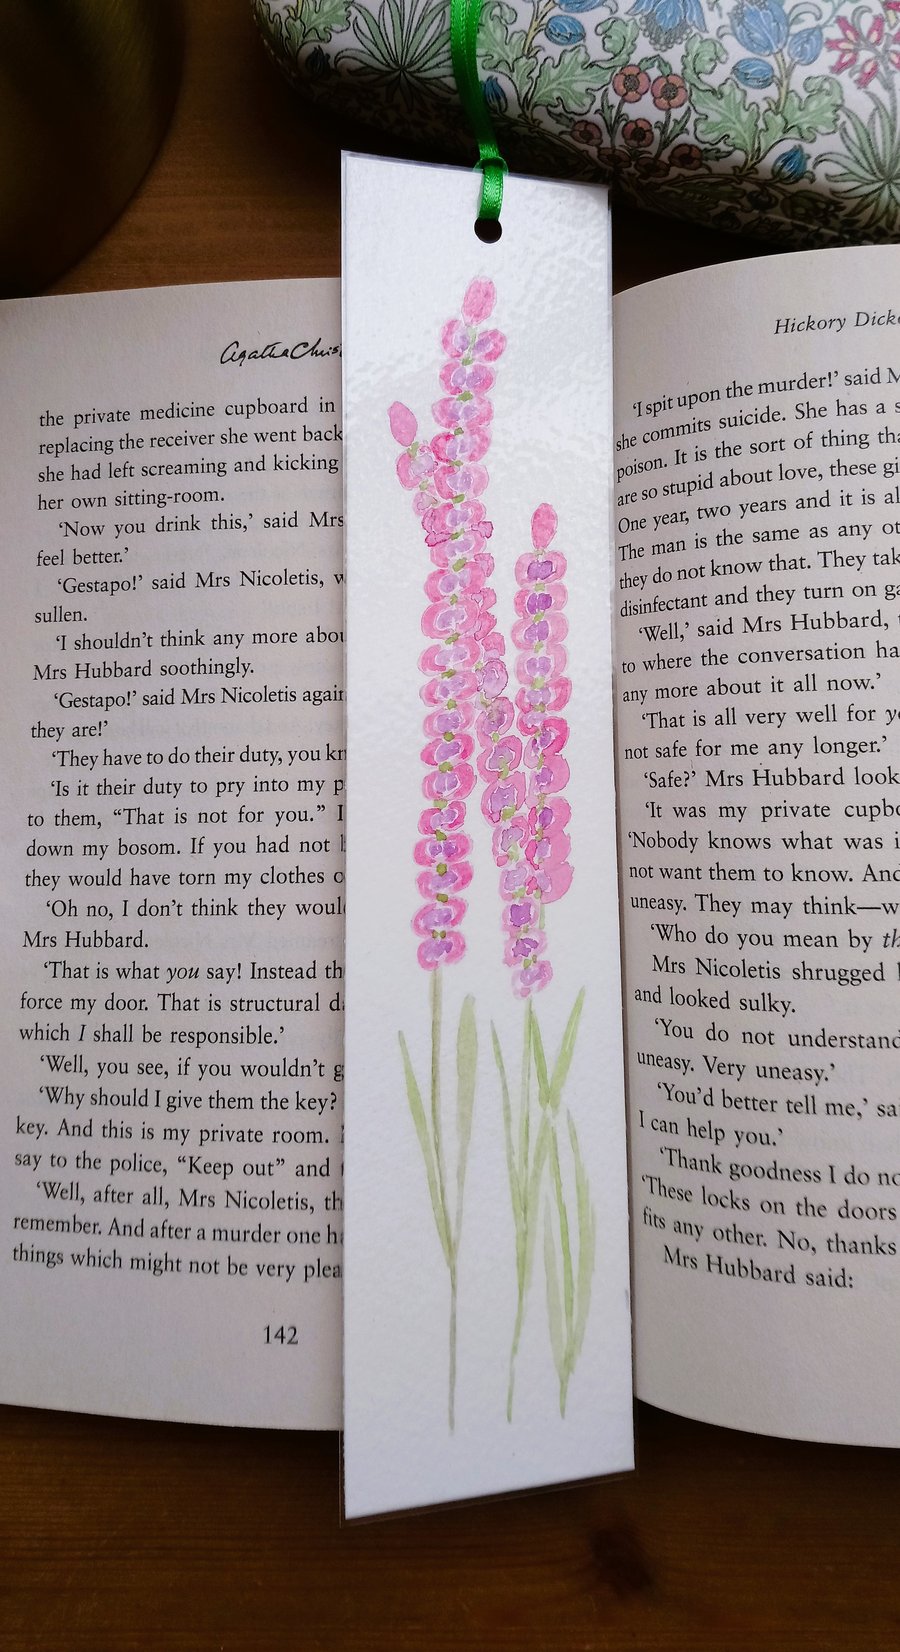 Original Hand Painted Pink Flower Bookmark